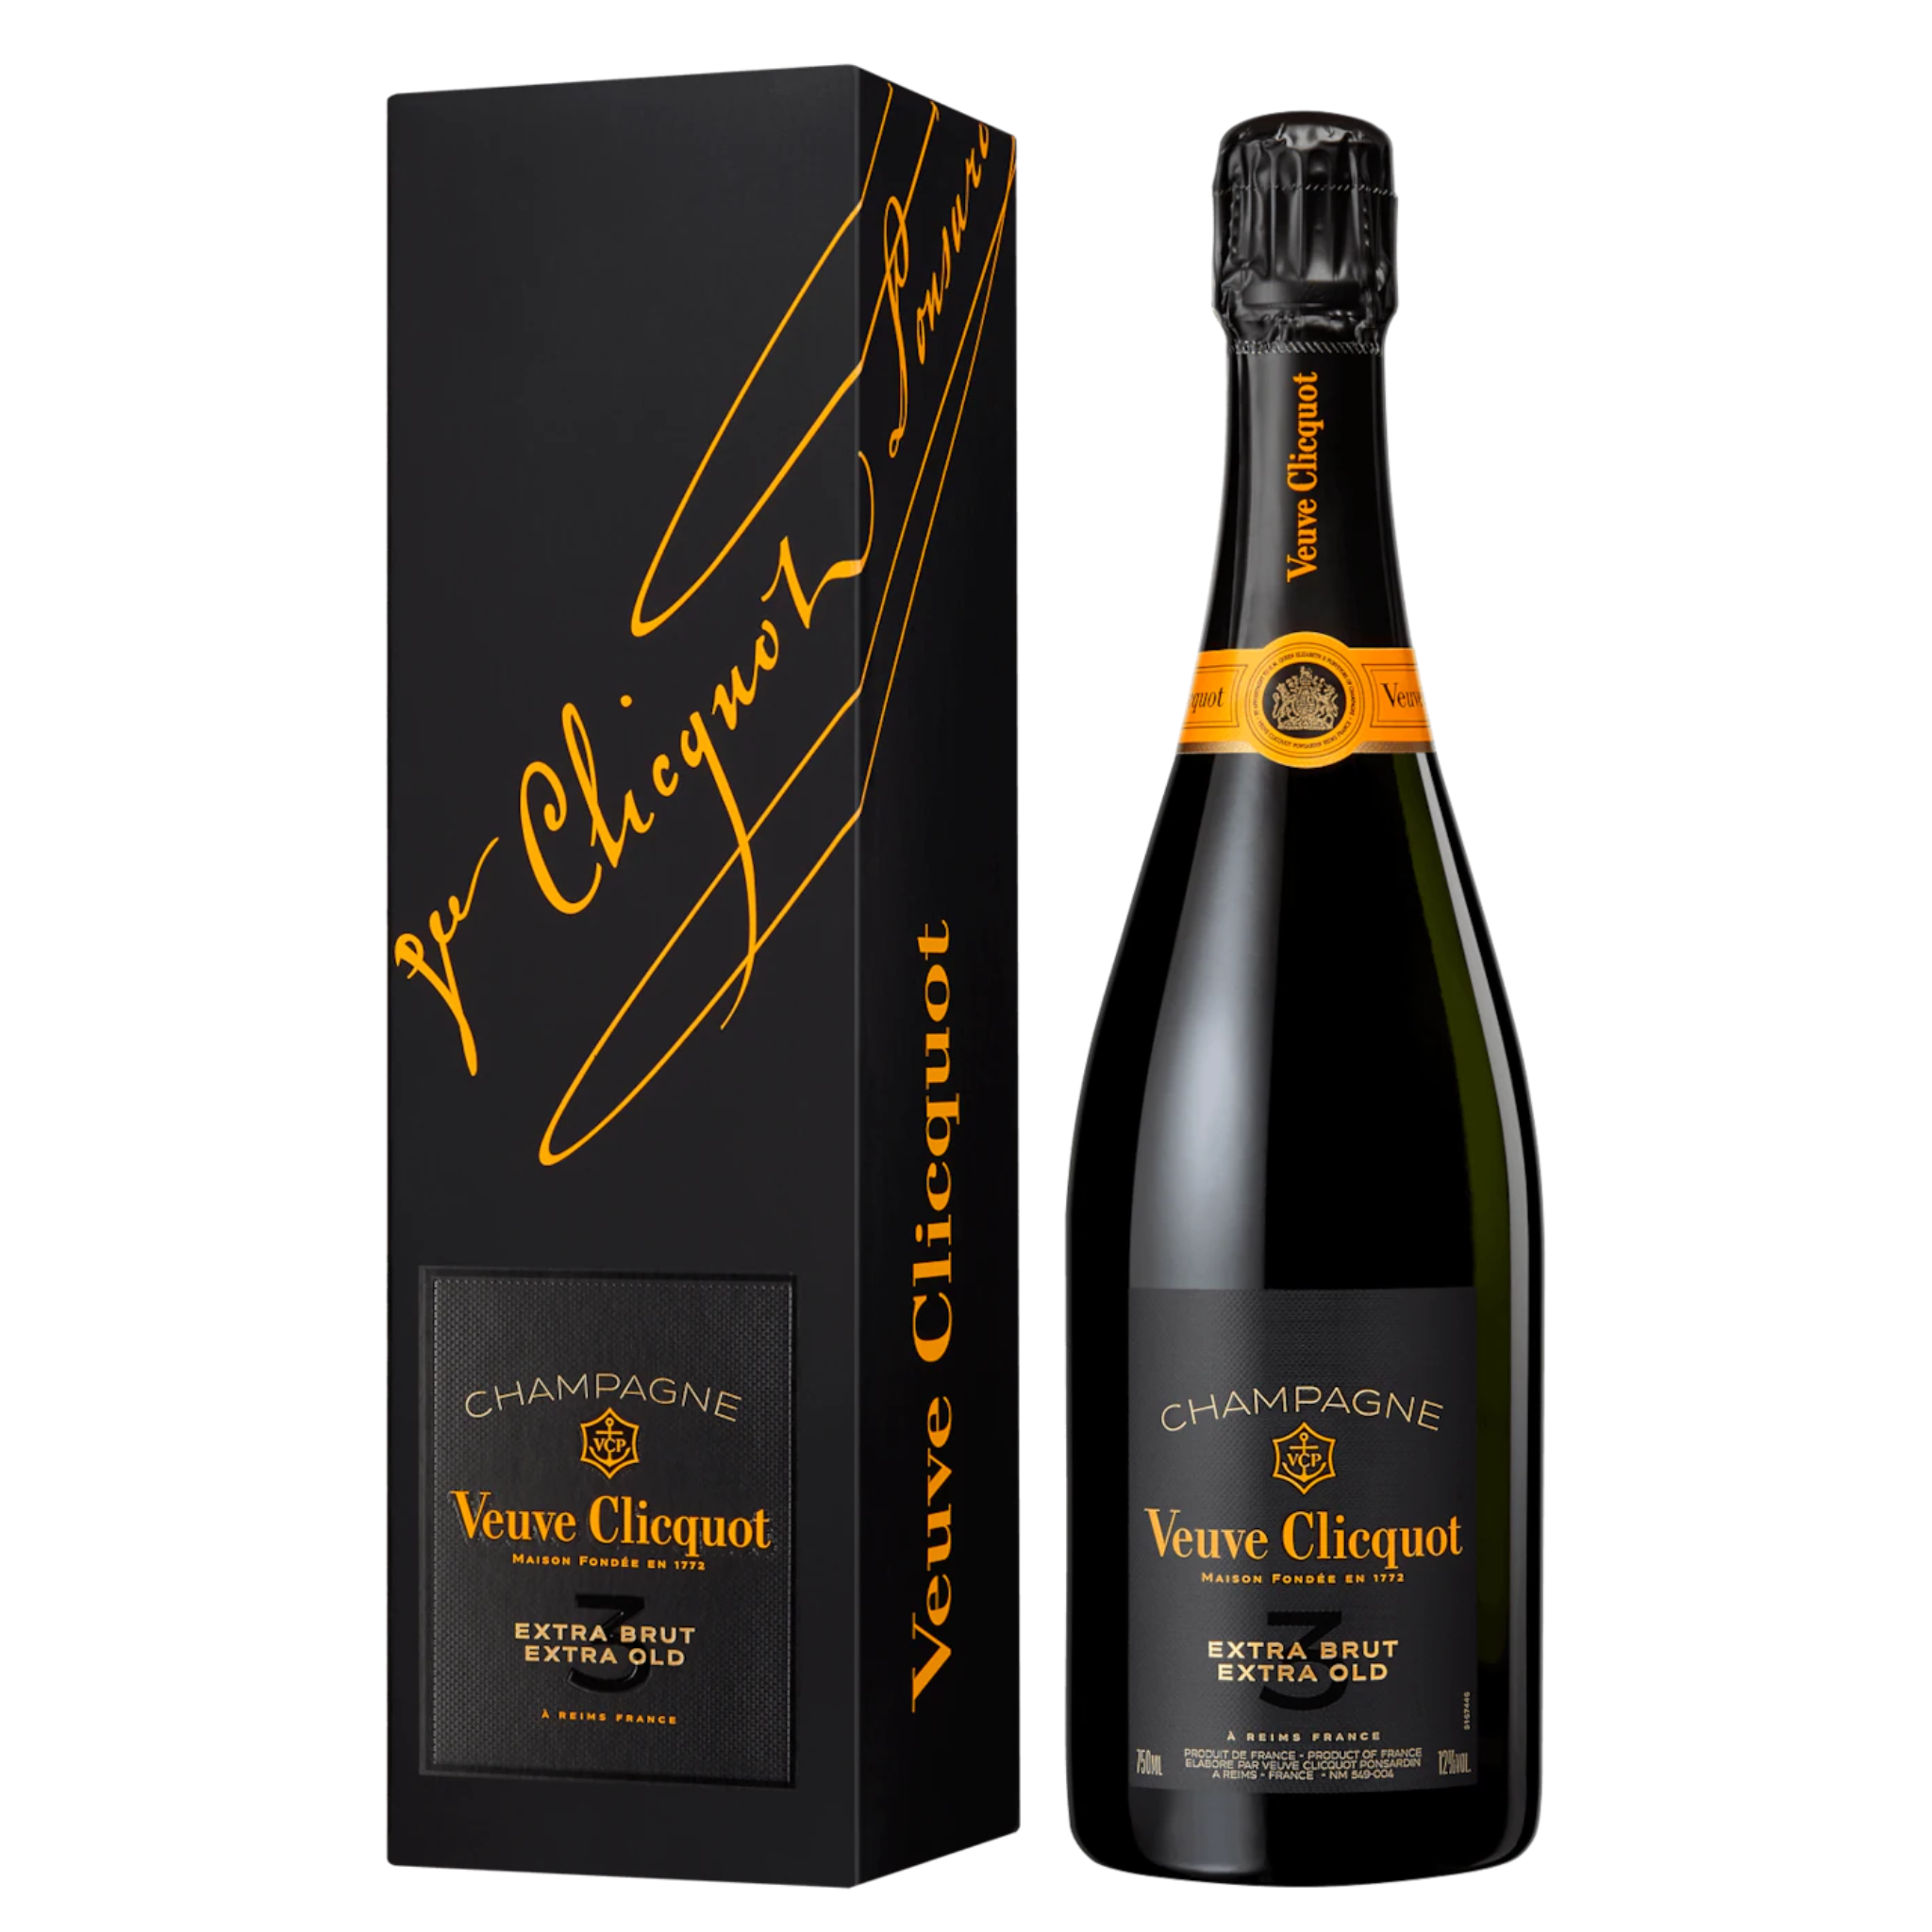 Buy Veuve Clicquot : Brut Rose Champagne online